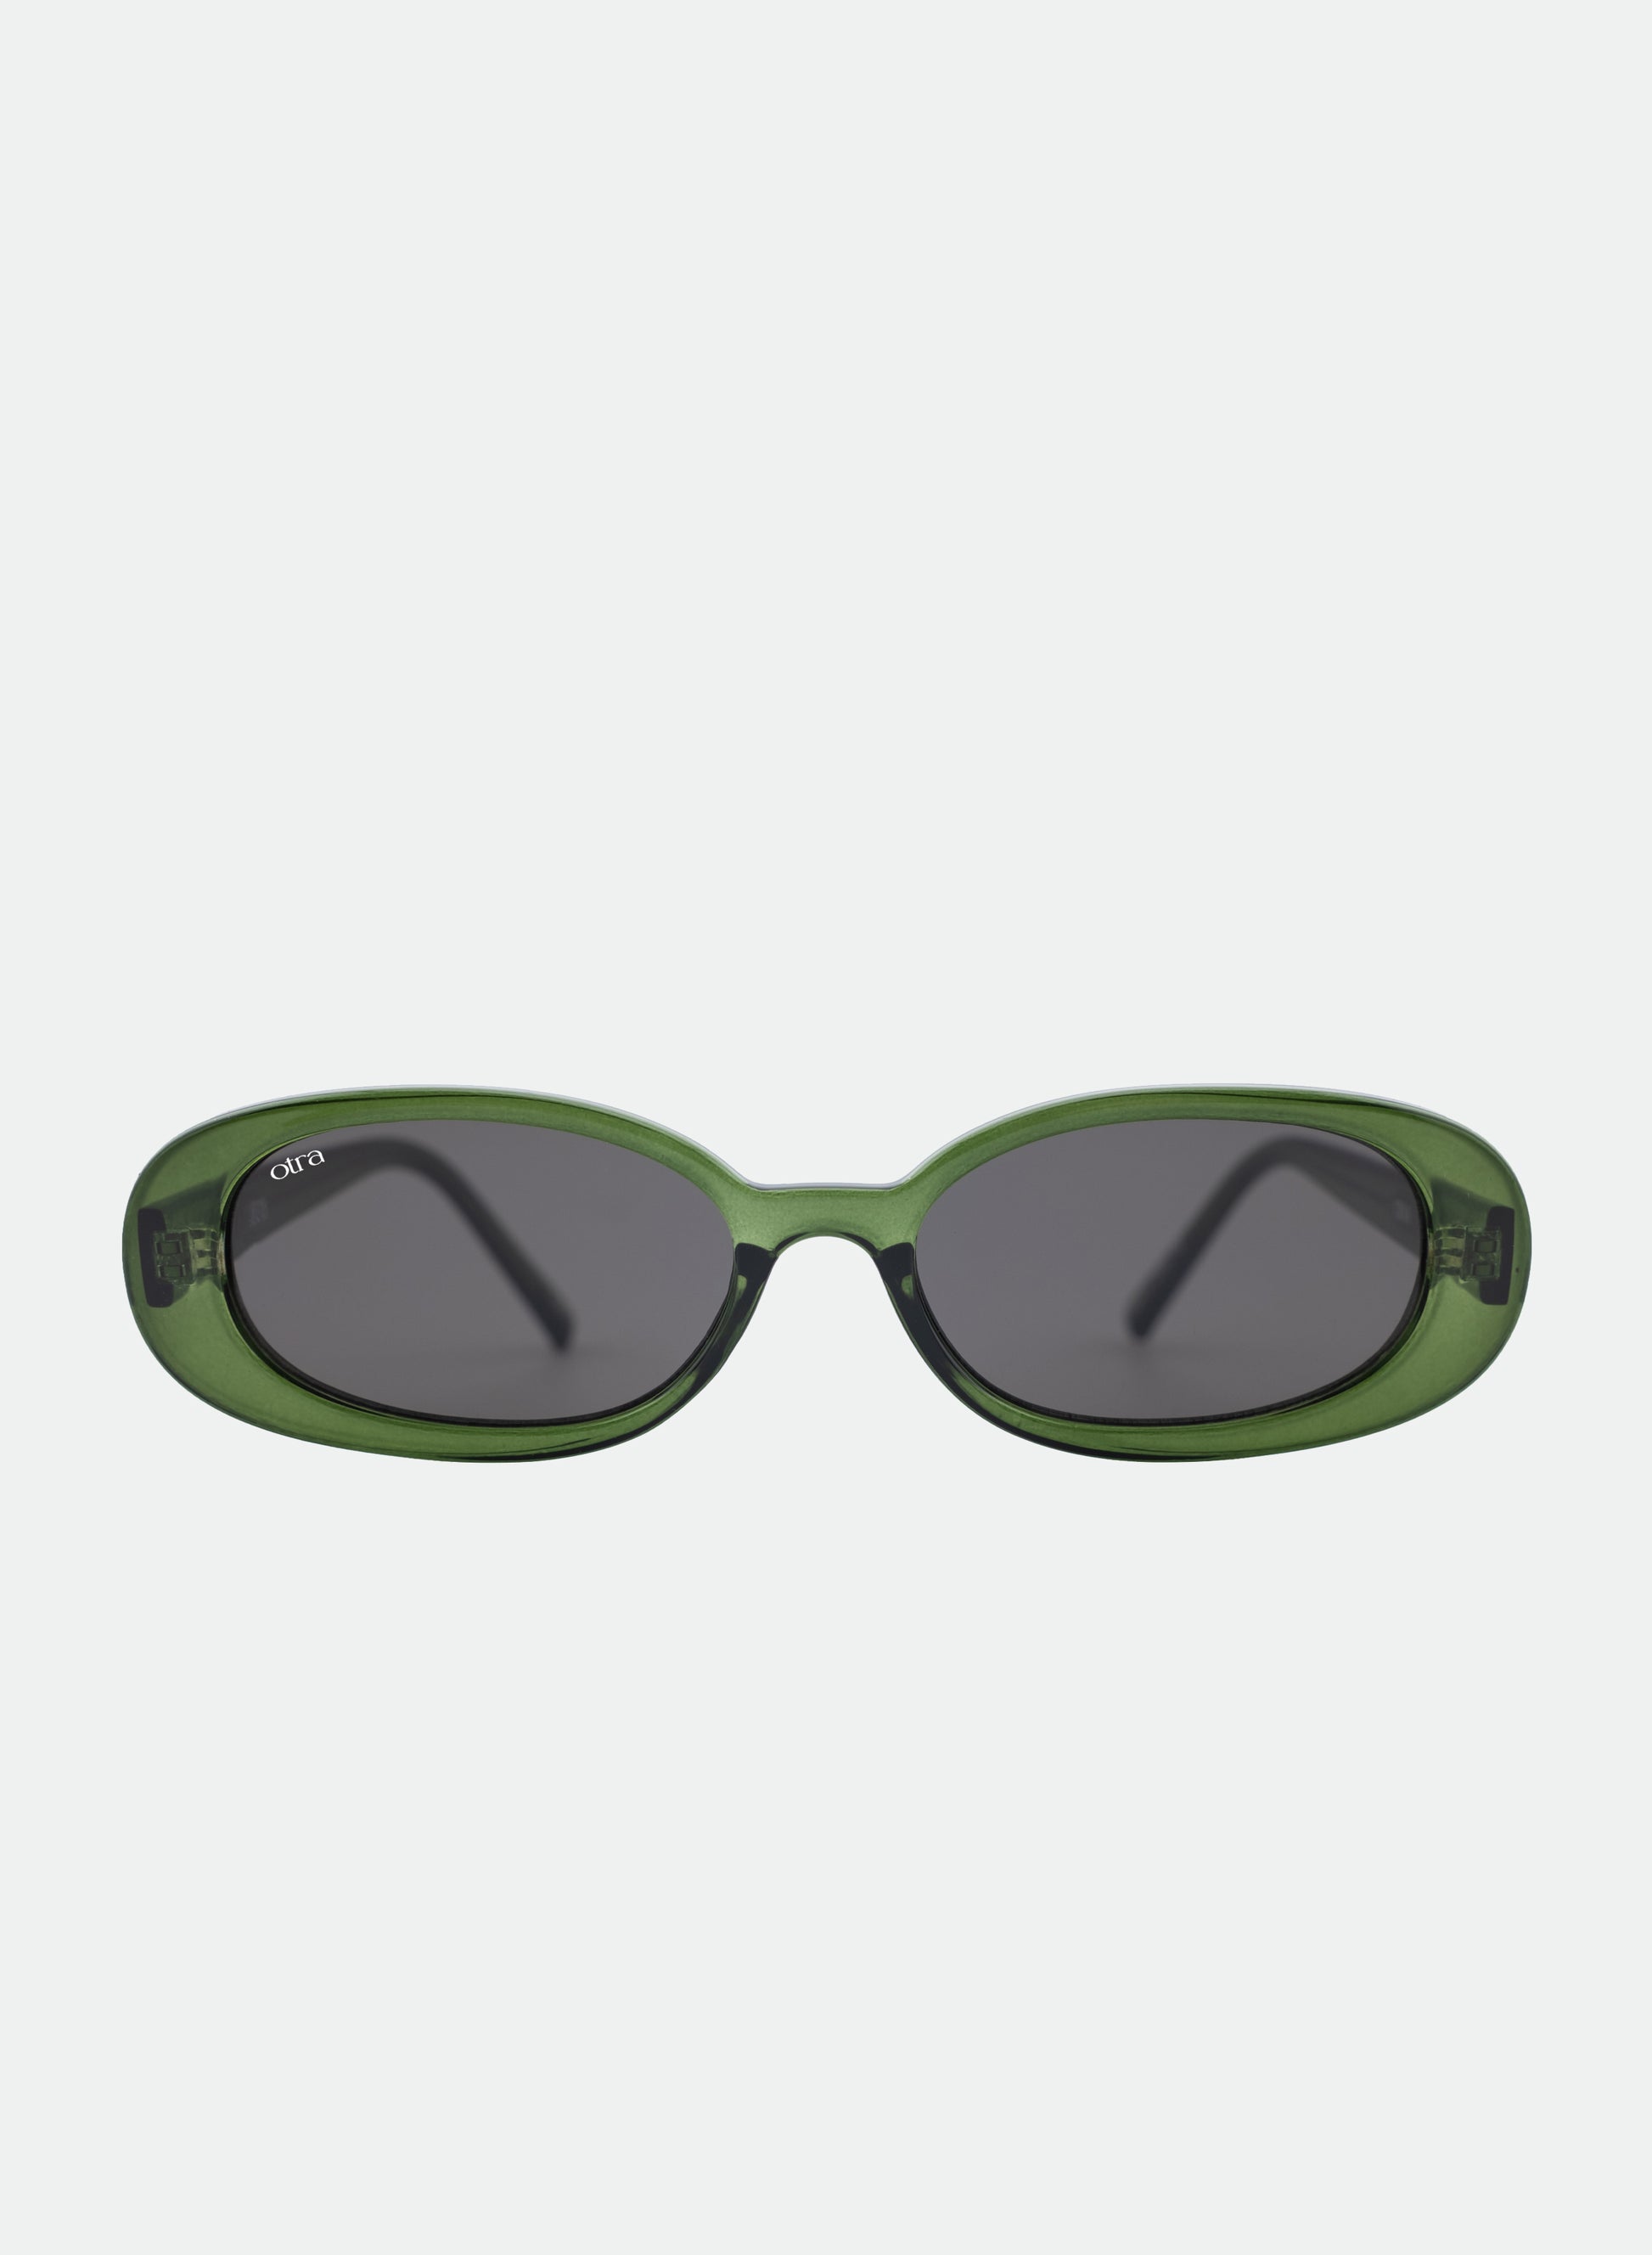 Gina sunglasses in green matcha